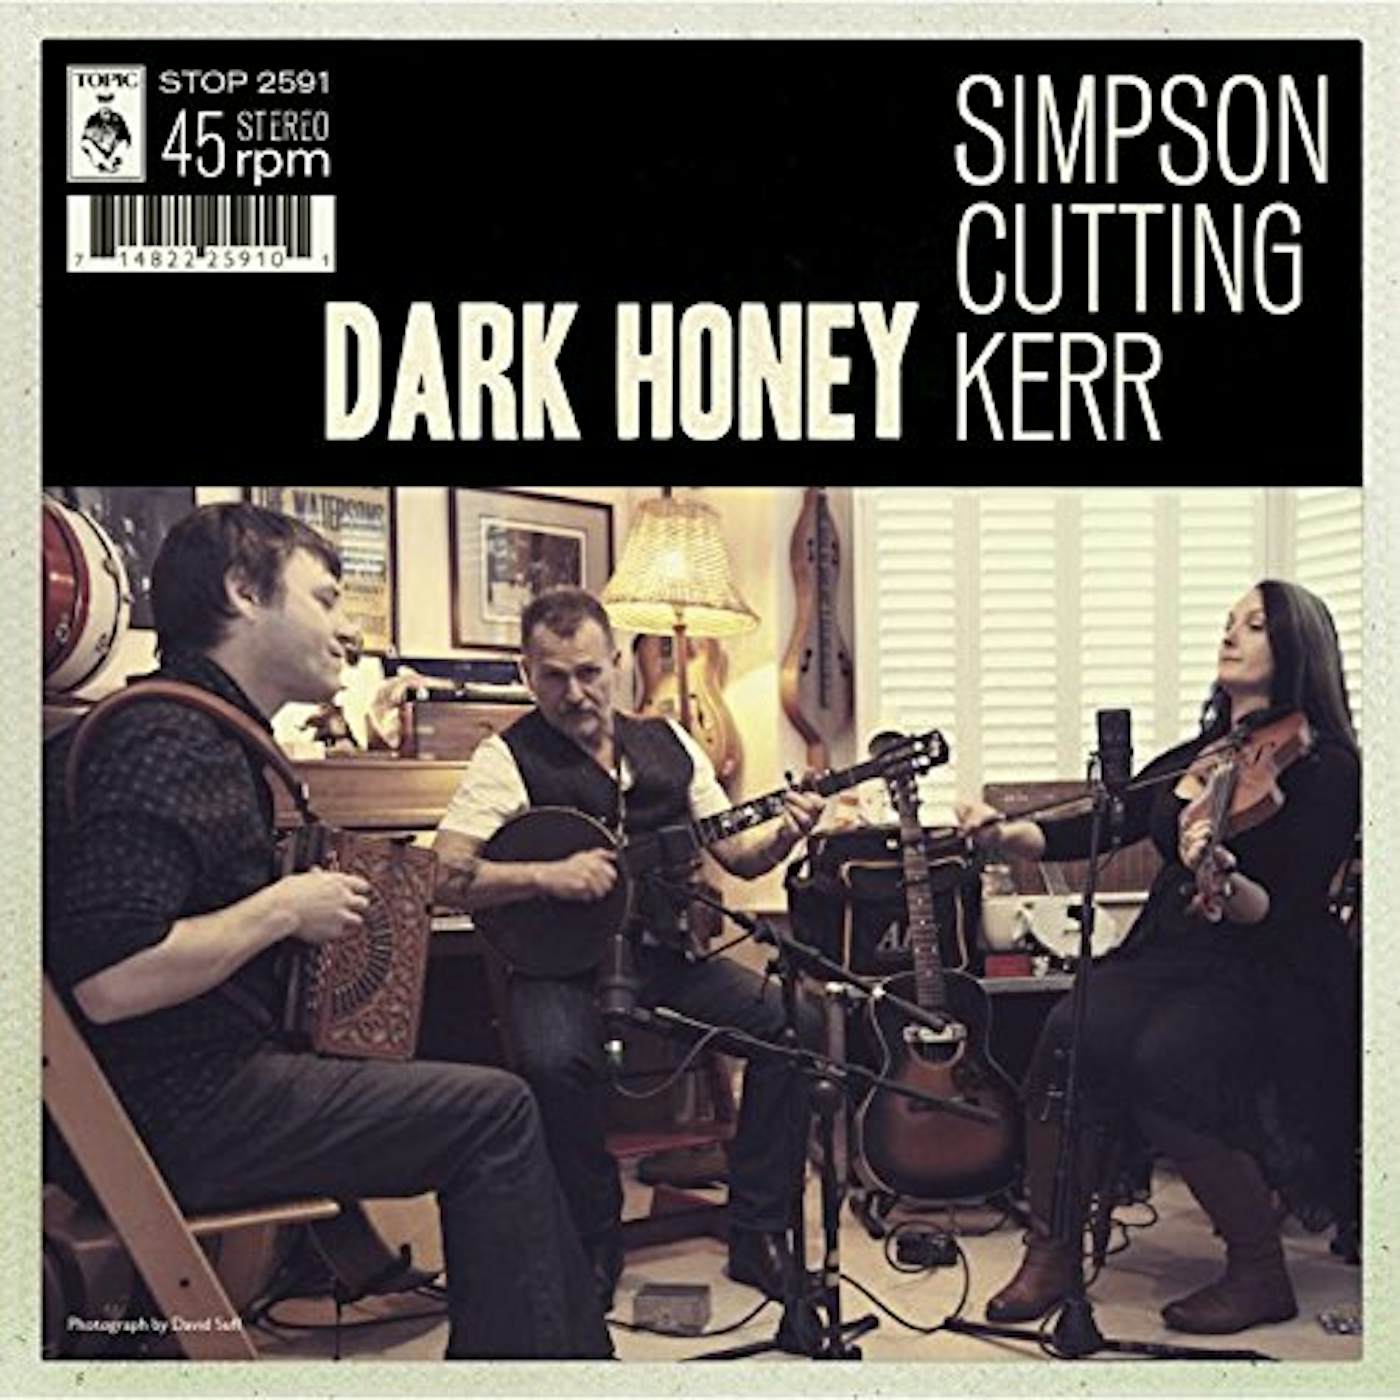 Simpson Cutting Kerr DARK HONEY Vinyl Record